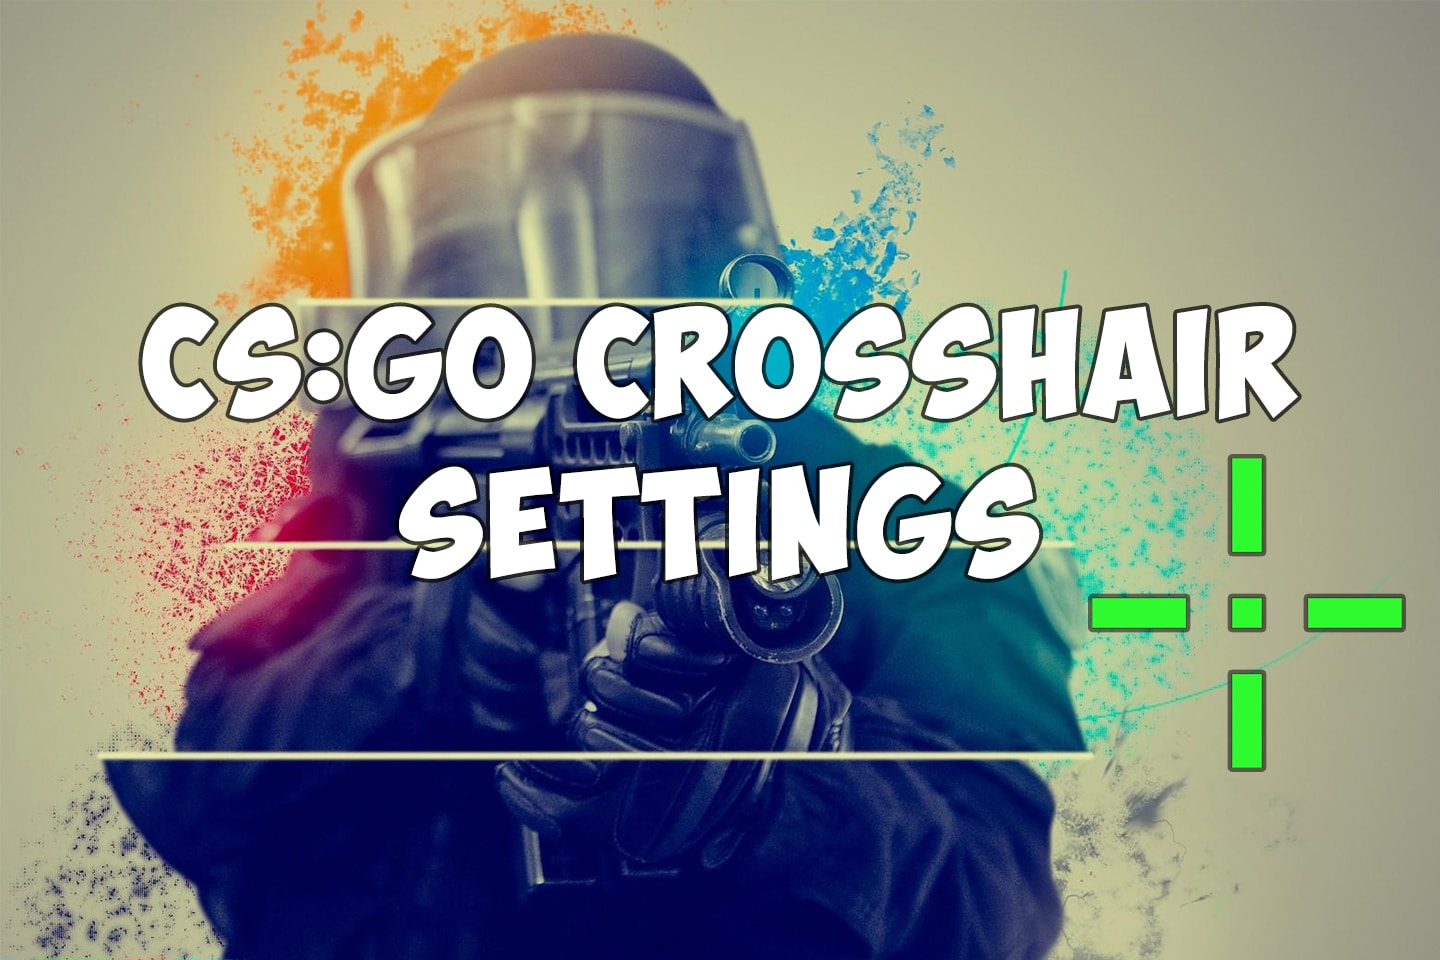 How to change your crosshair in CS:GO